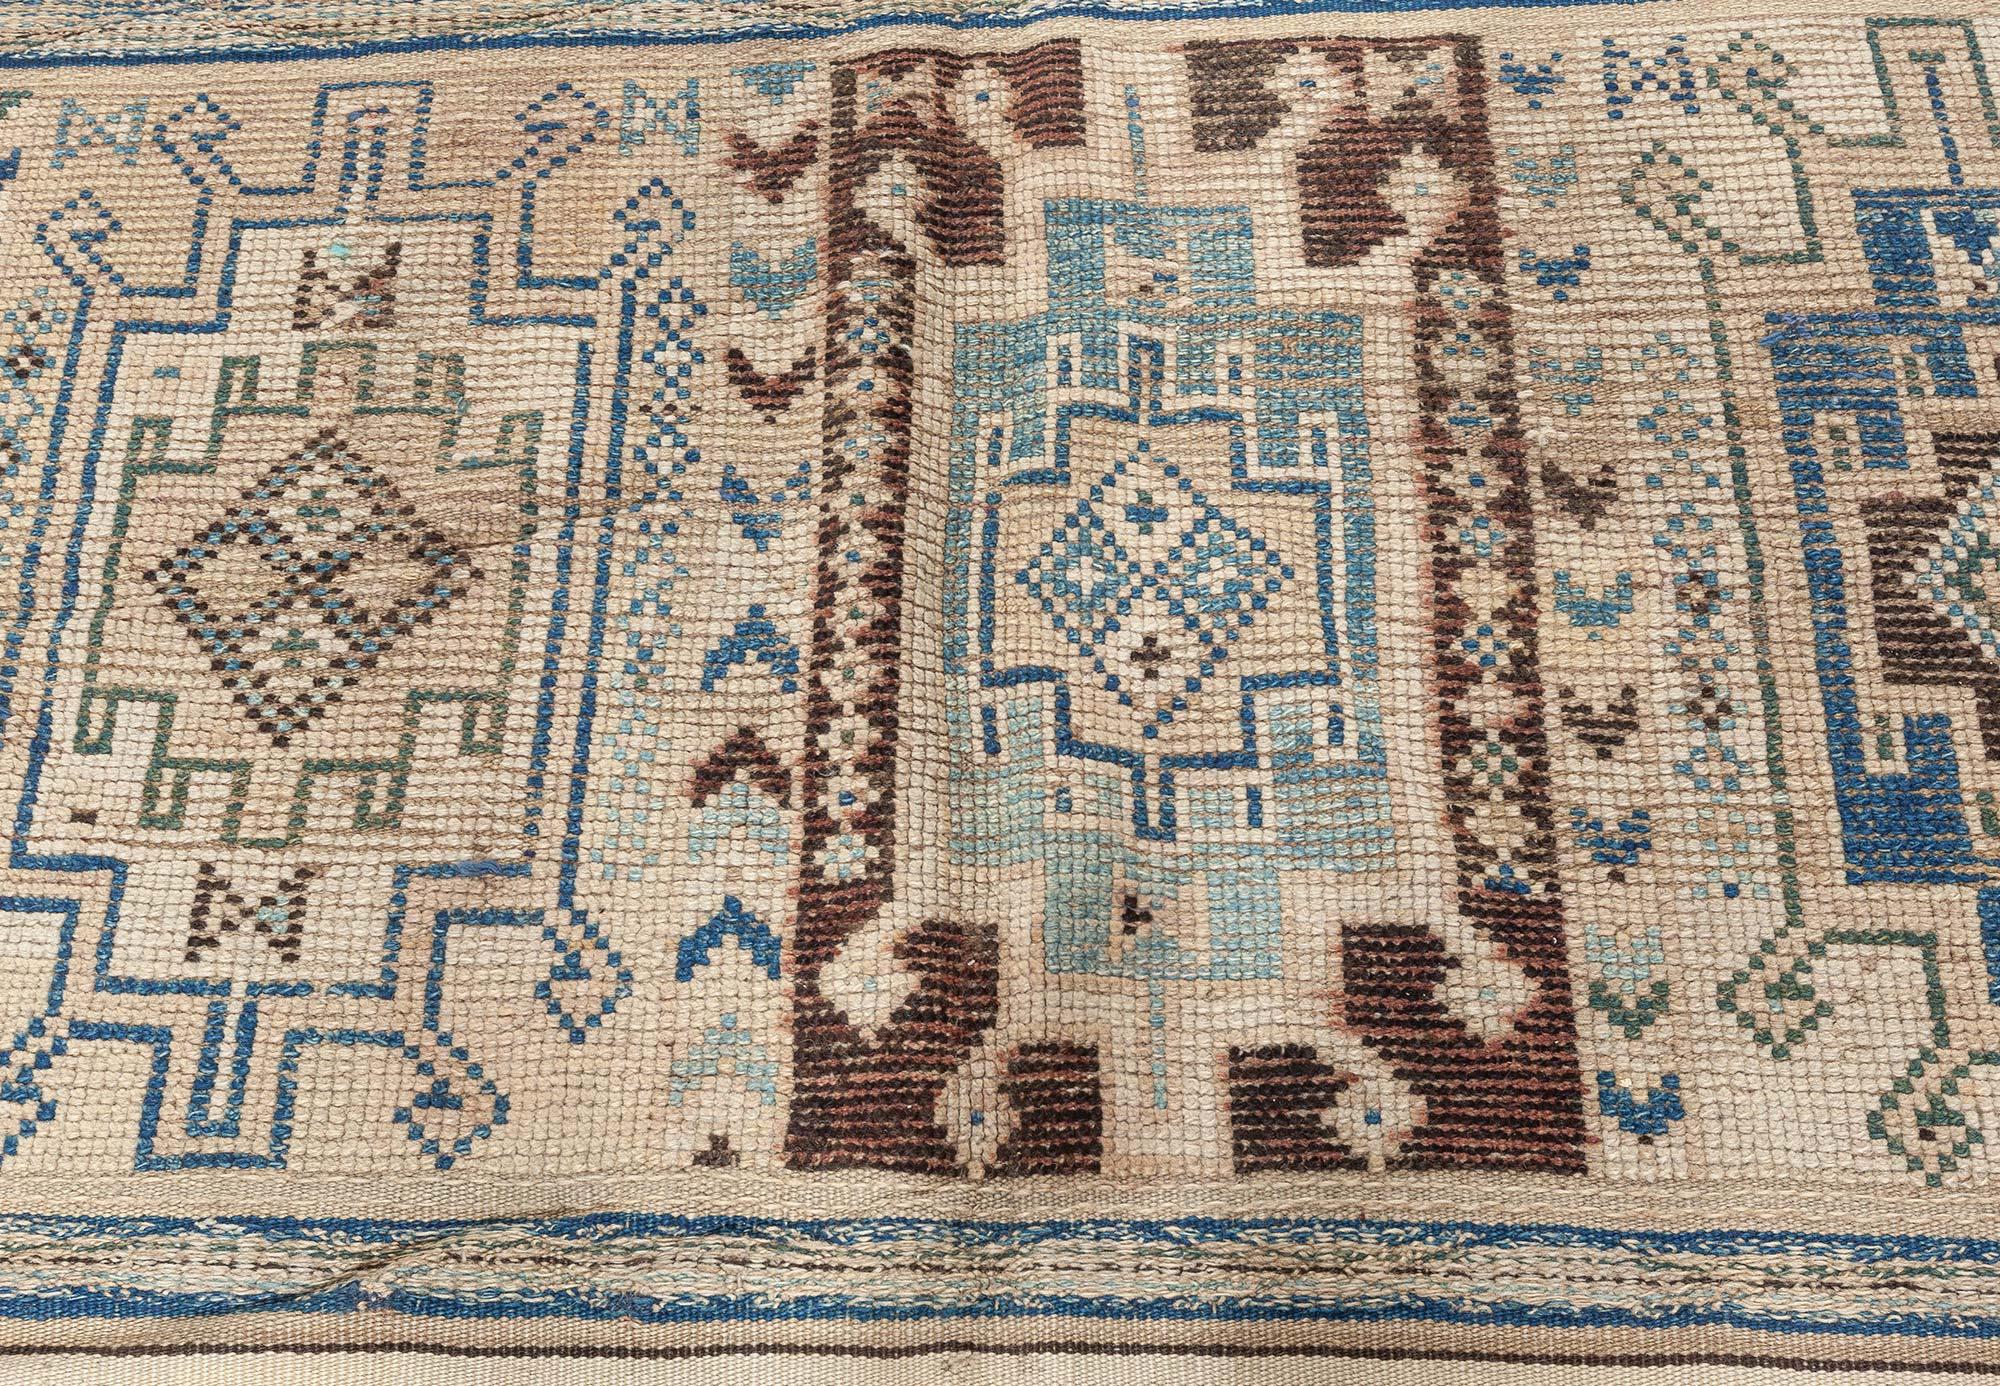 Vintage Moroccan geometric green handmade wool Kilim rug
Size: 5'1